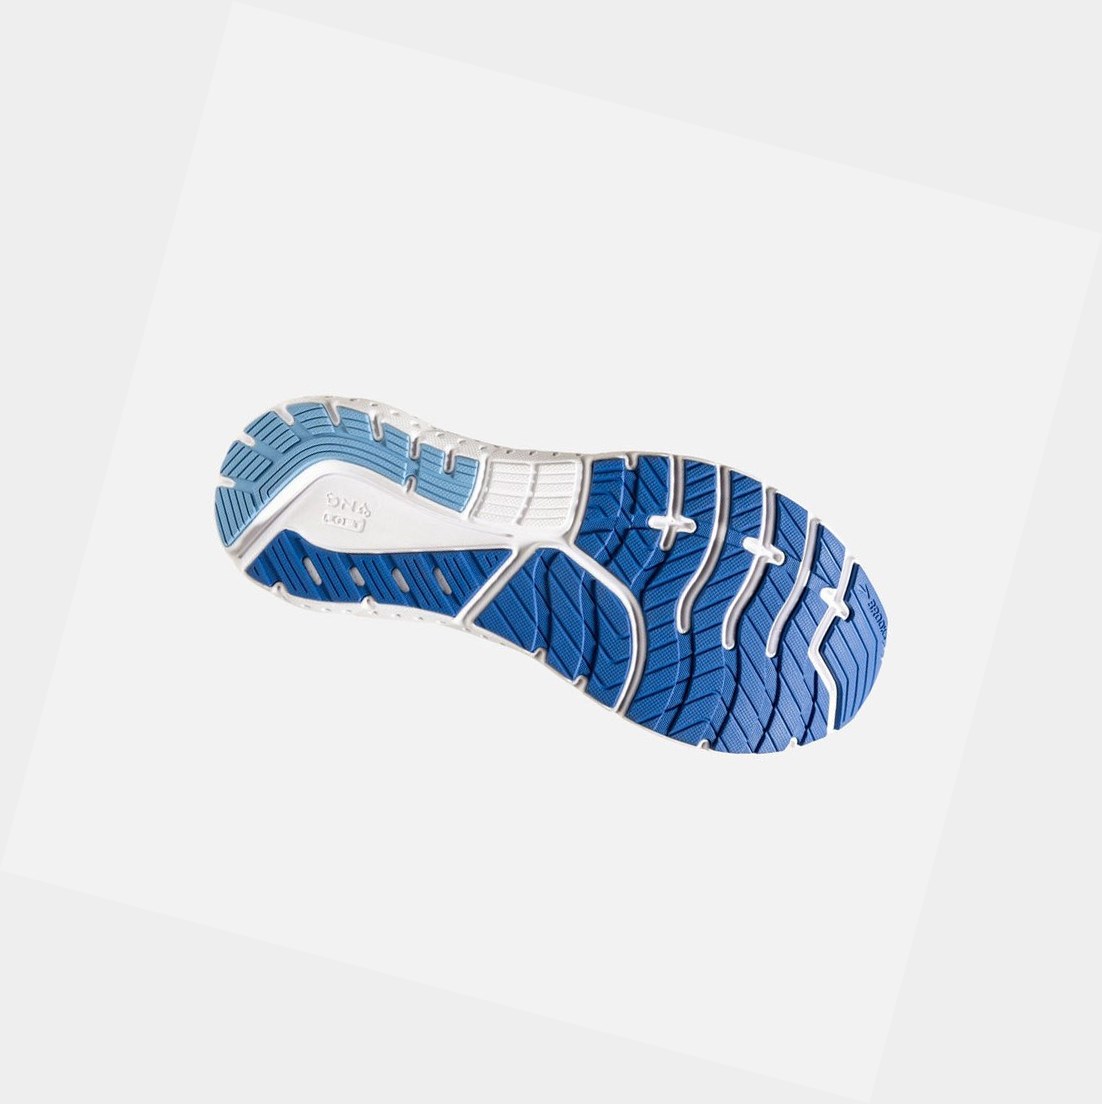 Brooks Glycerin 18 Women's Road Running Shoes Cornflower / Blue / Gold | GRBS-19802